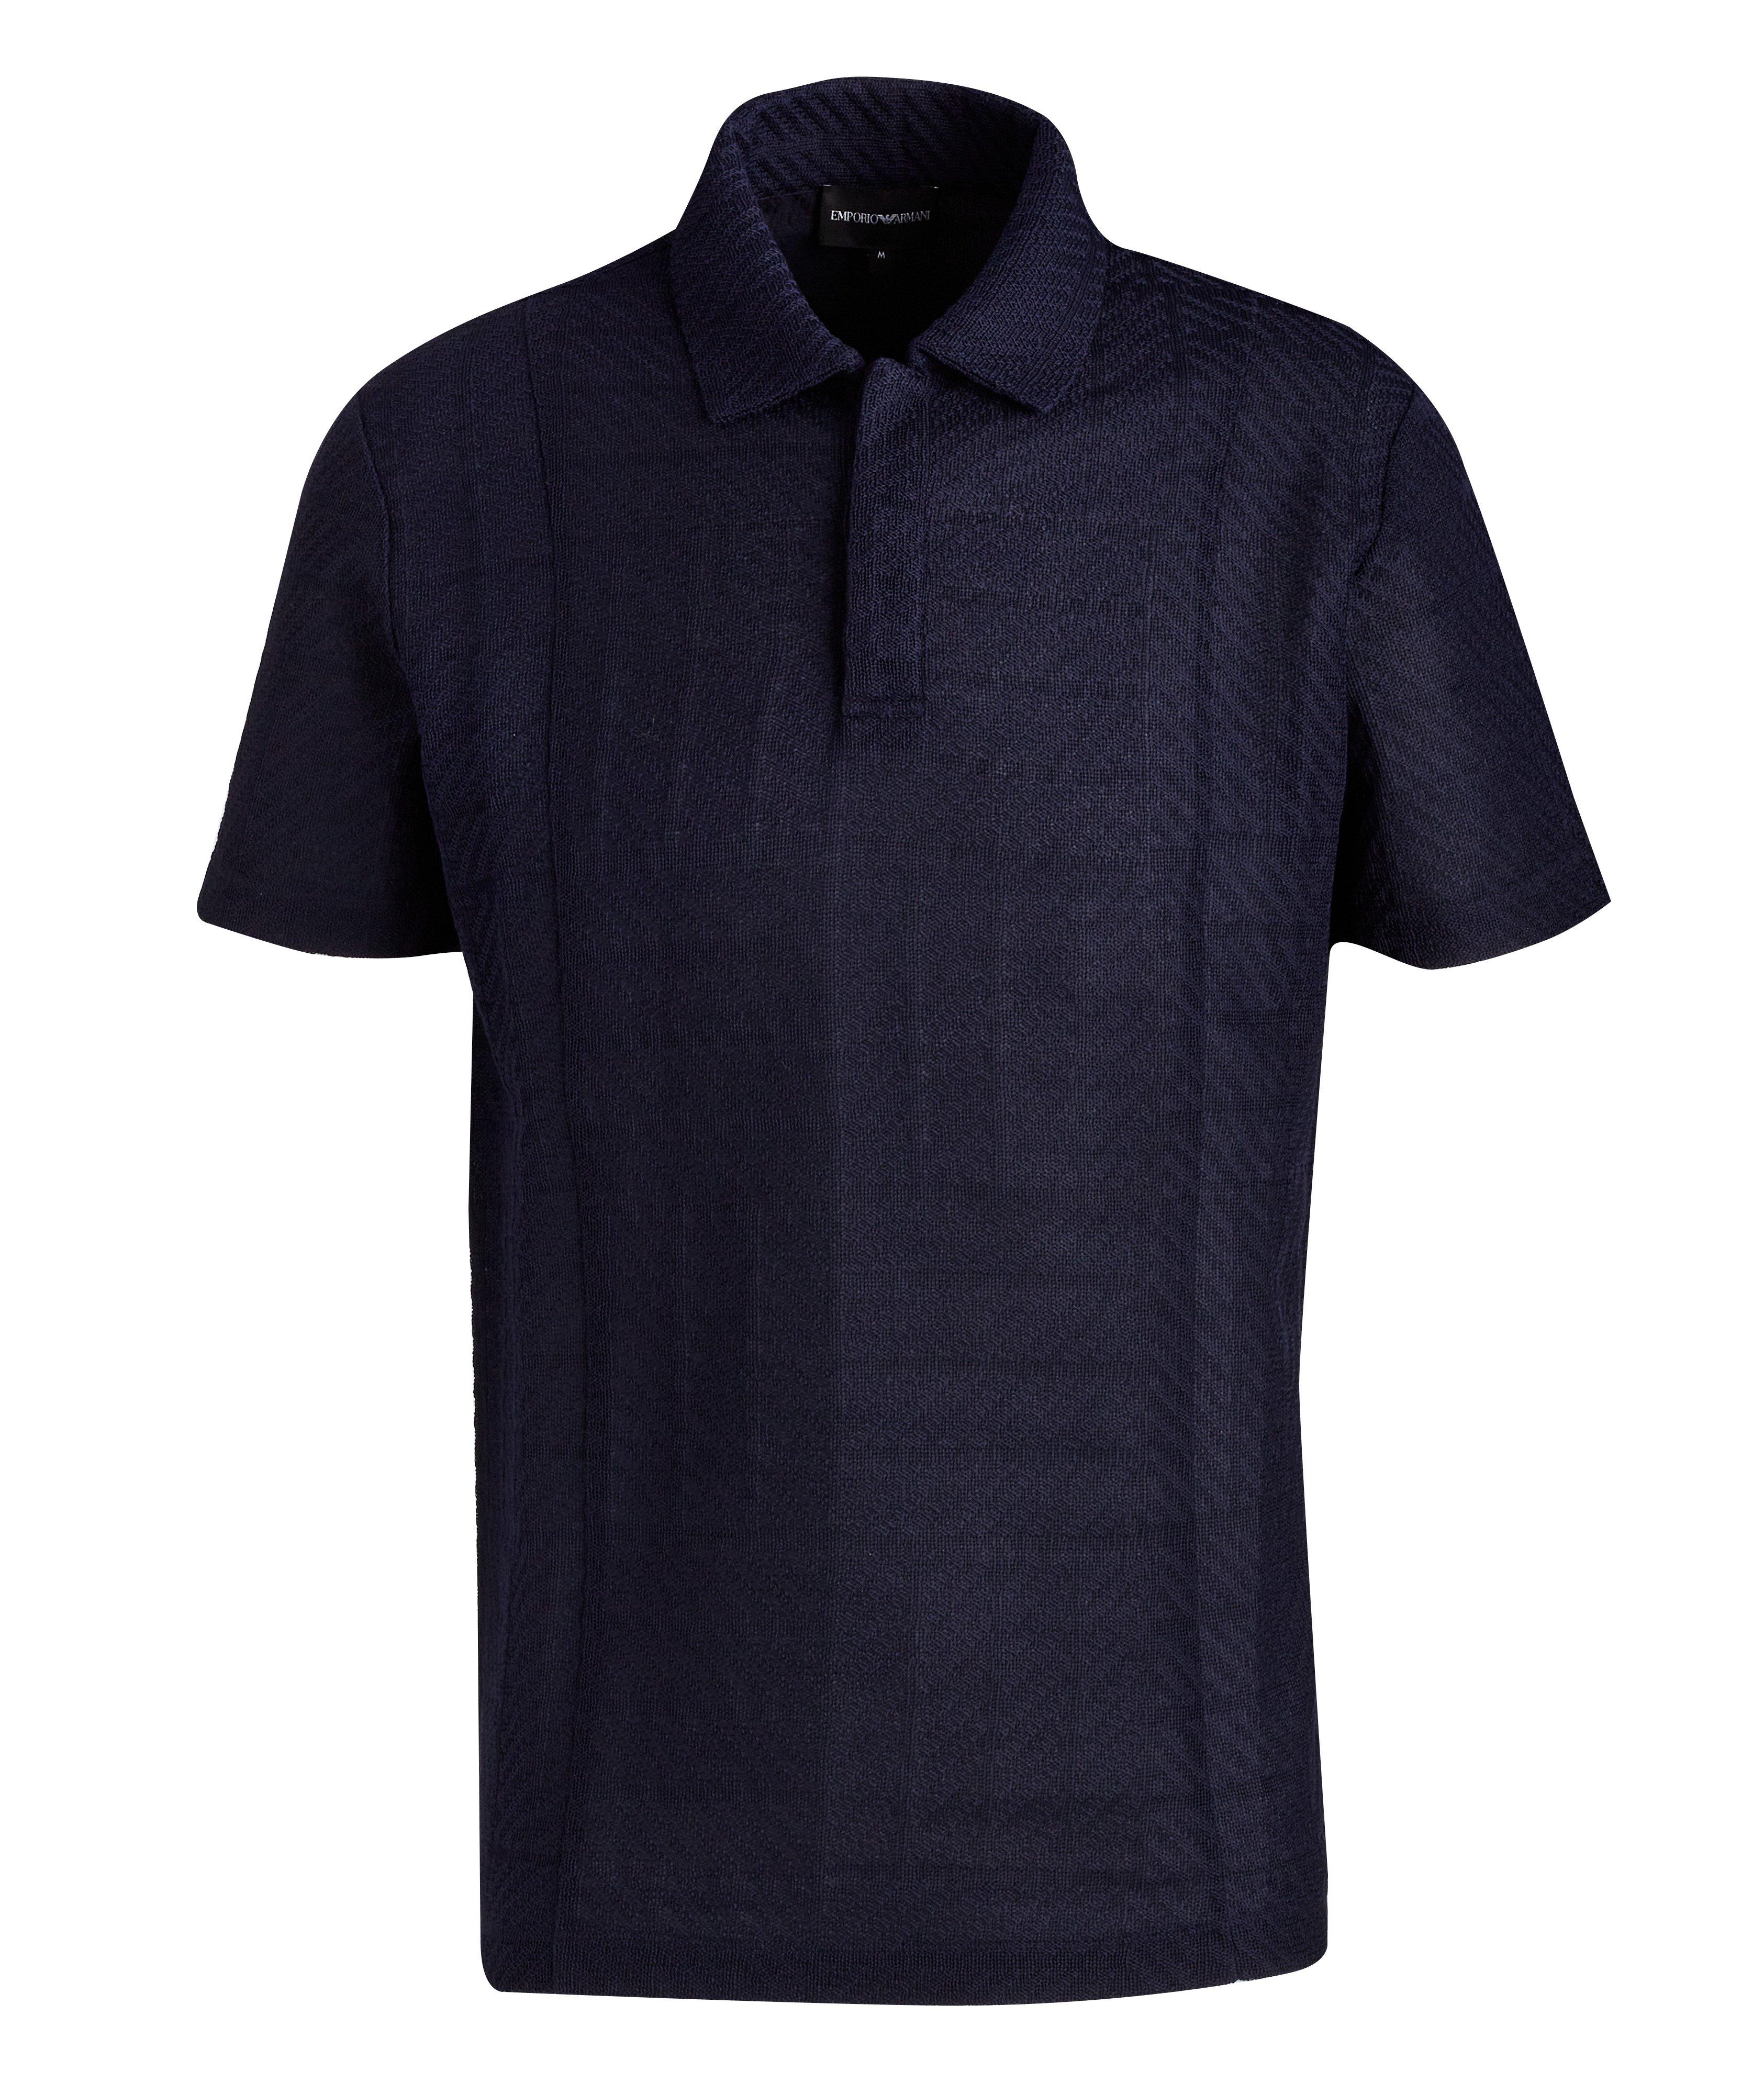 Cotton Jersey Polo Shirt with Jacquard Pattern image 0